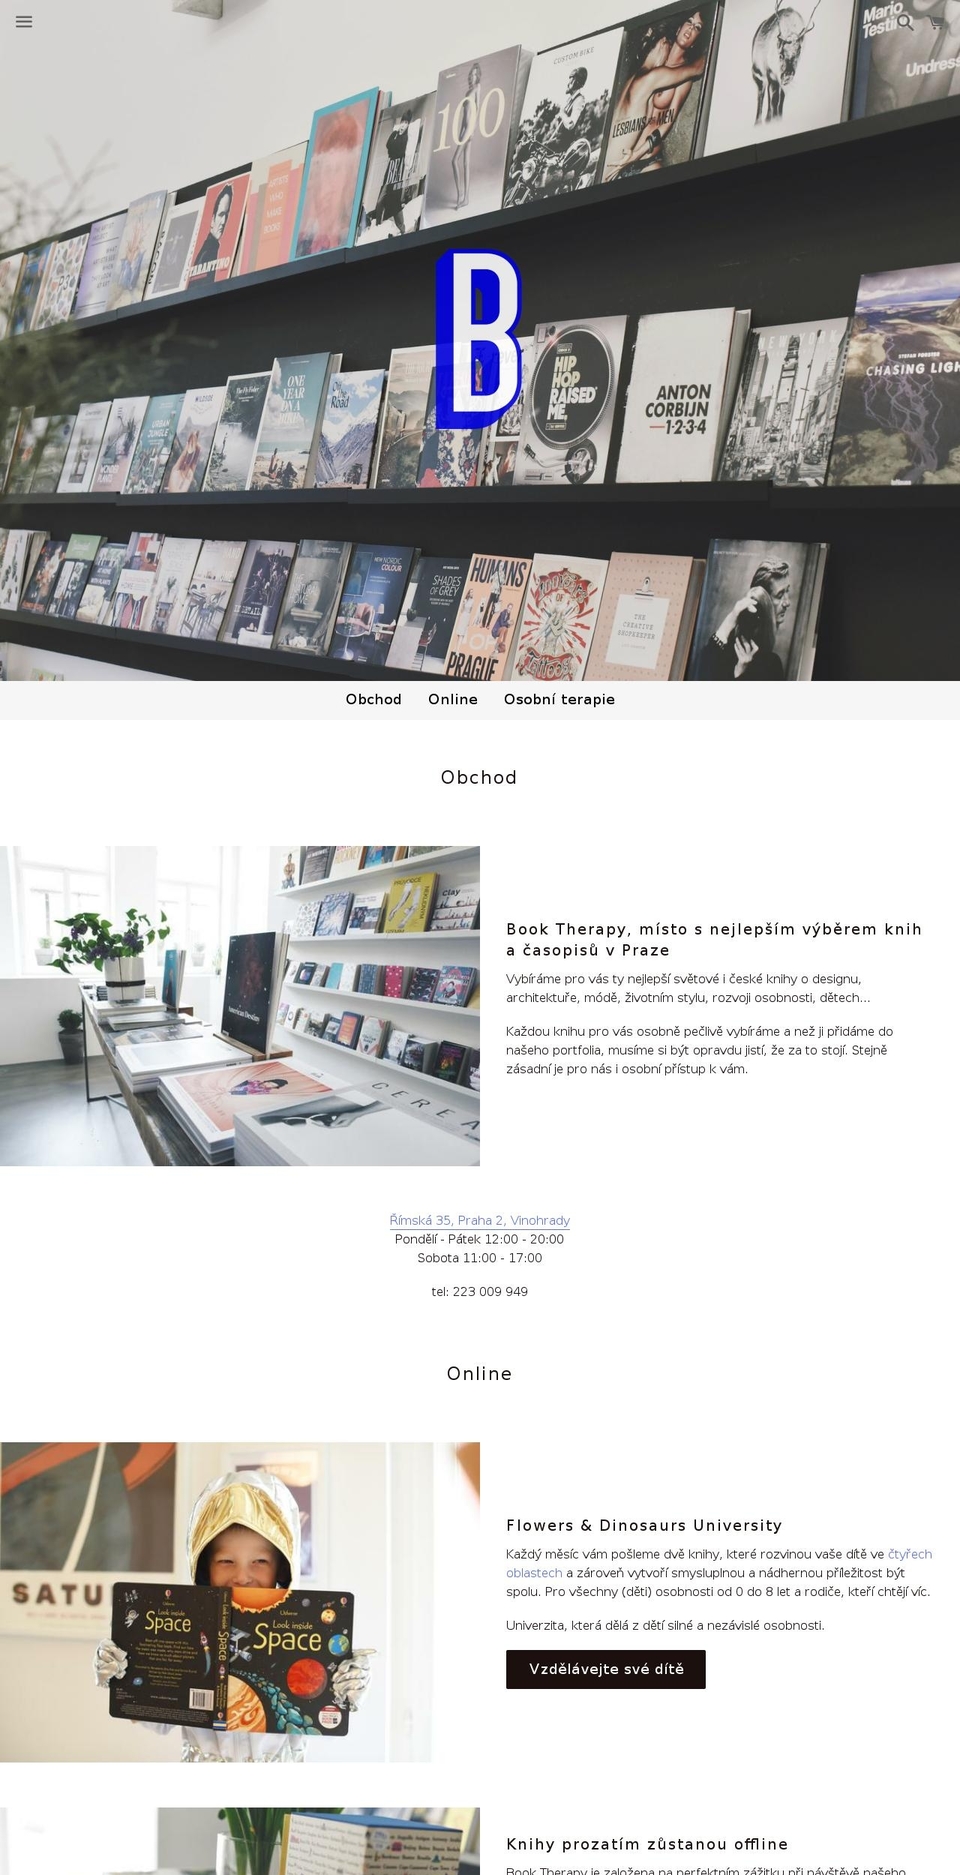 booktherapy.cz shopify website screenshot